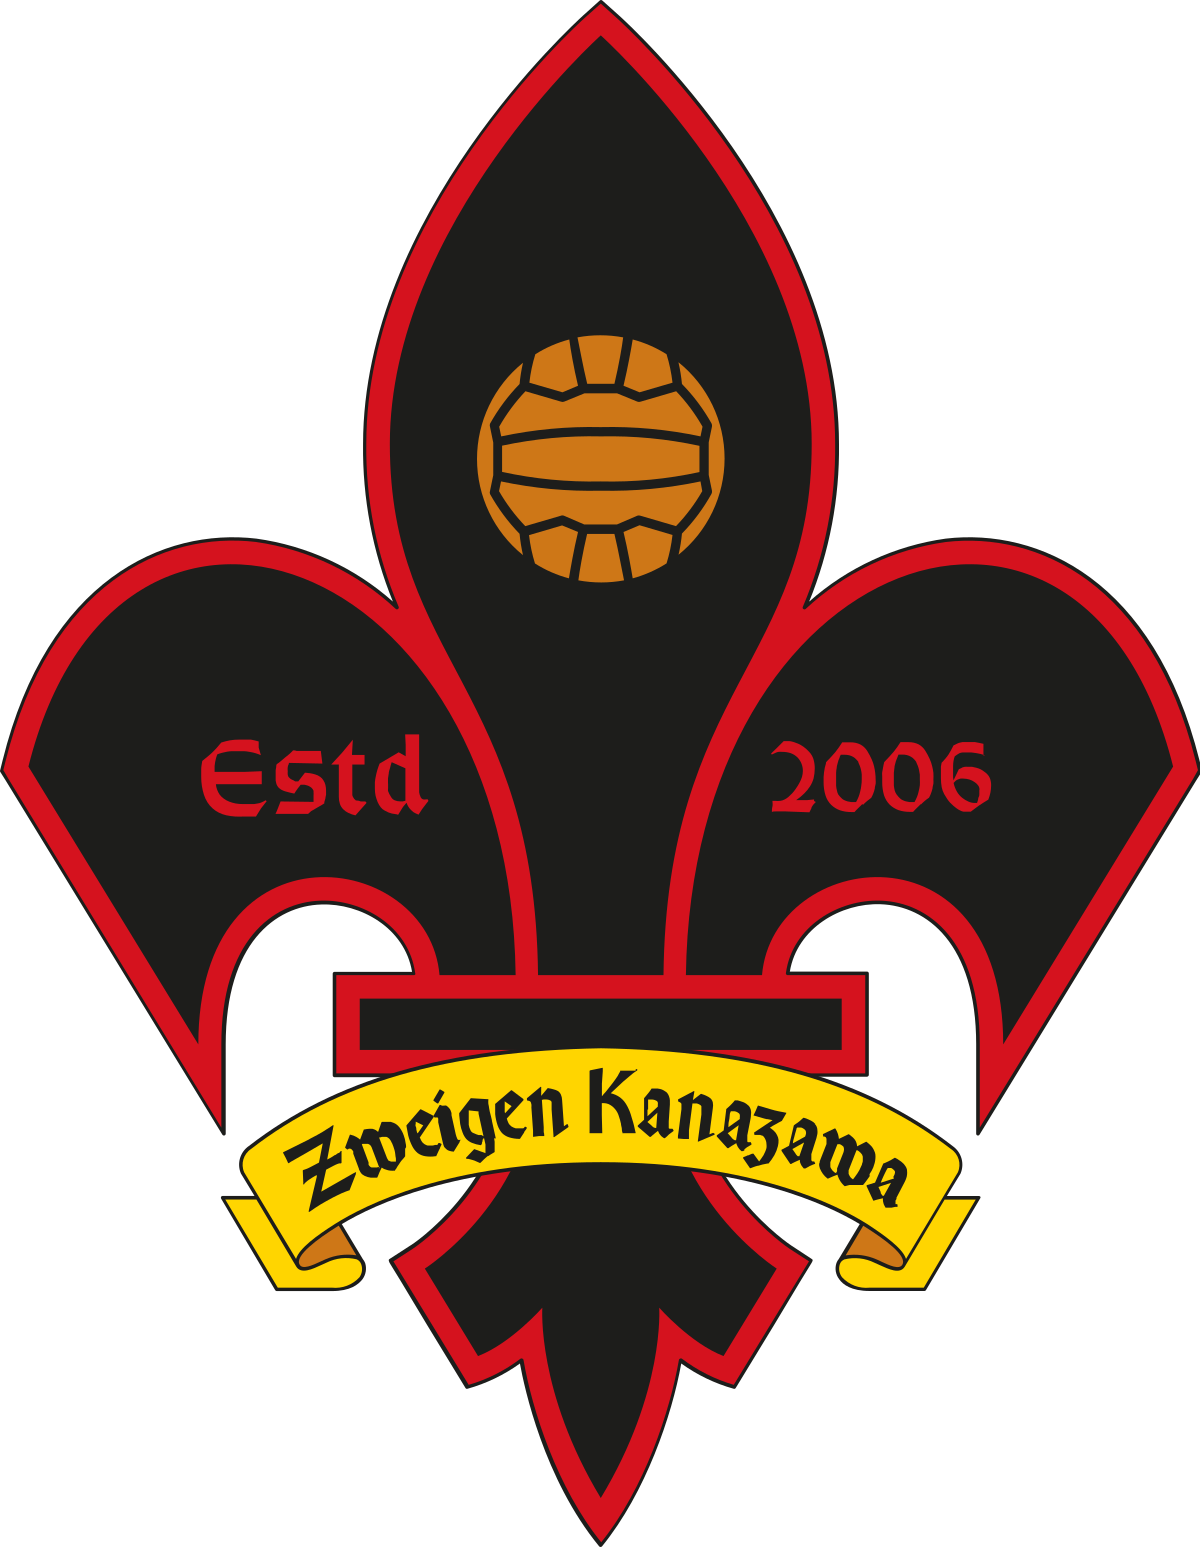 Wappen Ishikawa FC Zweigen Kanazawa  129785